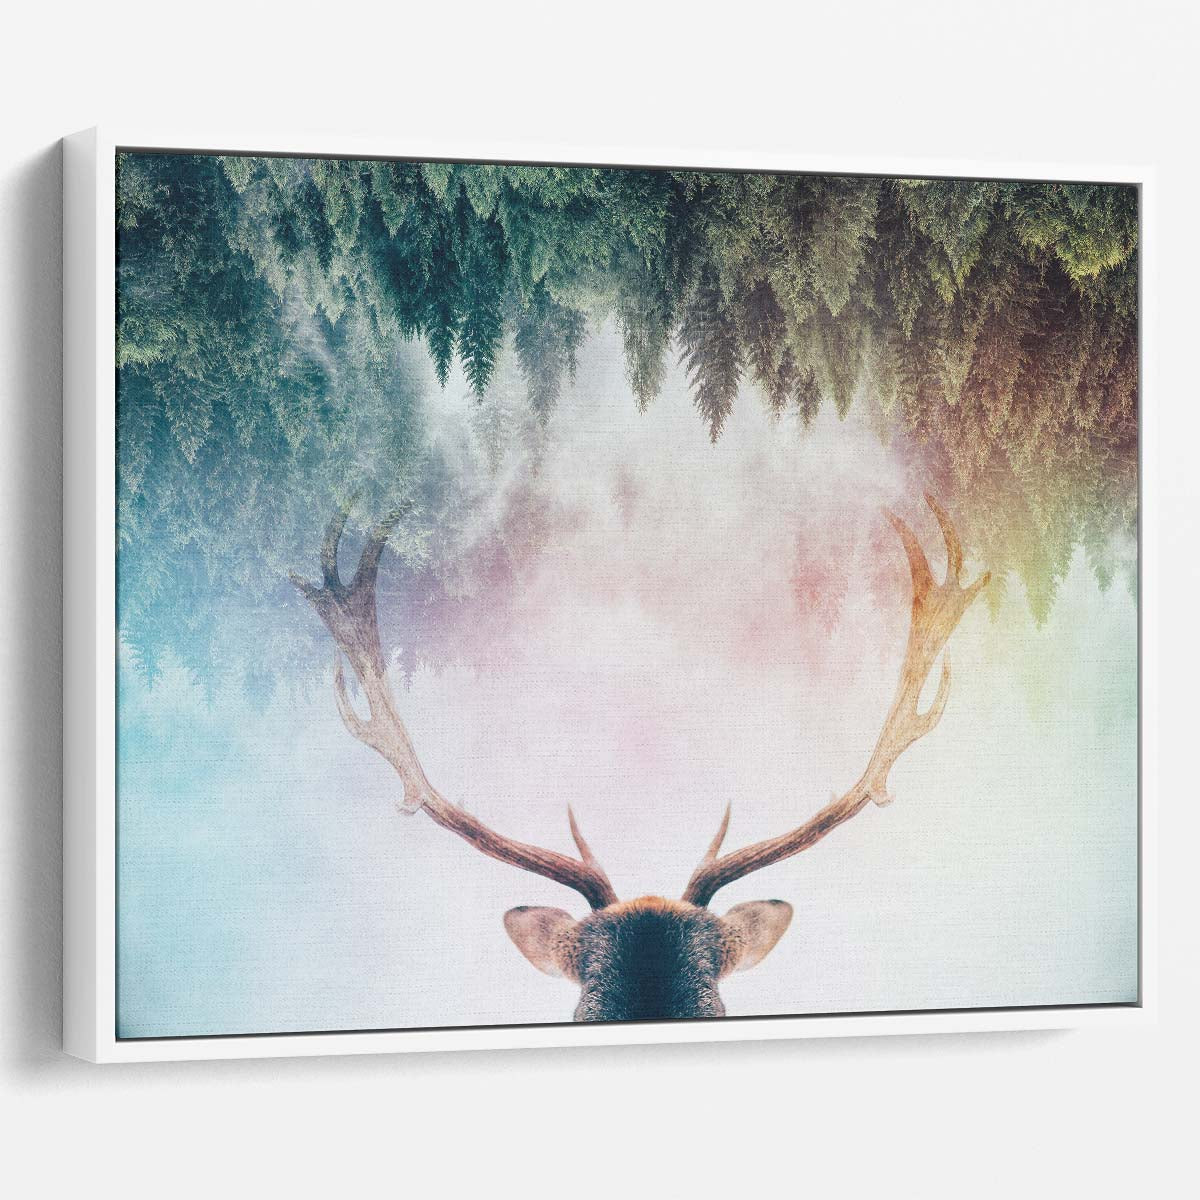 Surreal Pine Forest & Antlered Deer Double Exposure Wall Art